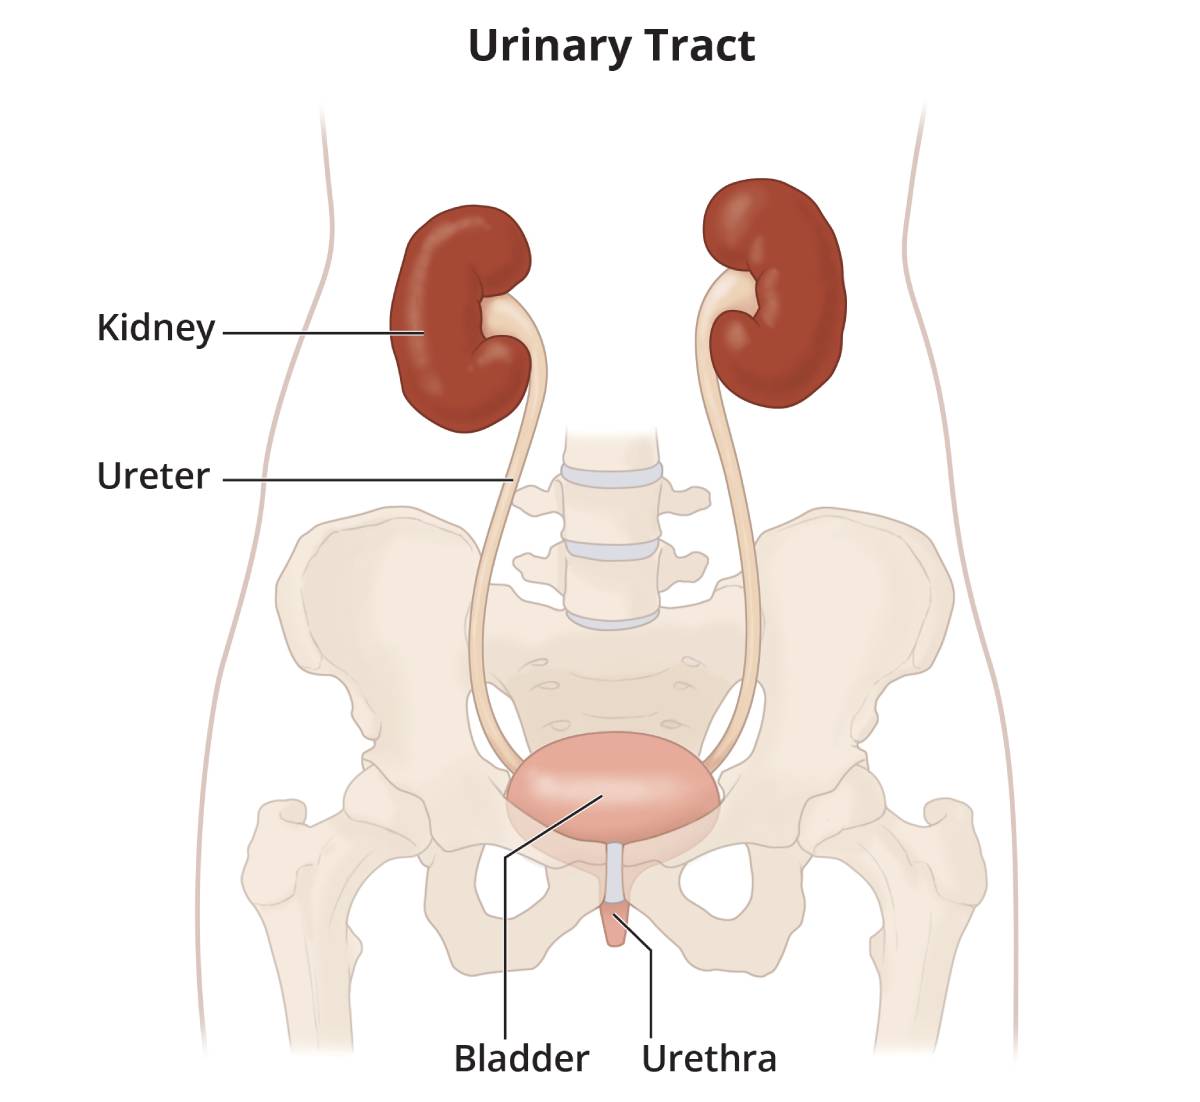 Ectopic Kidney - NIDDK